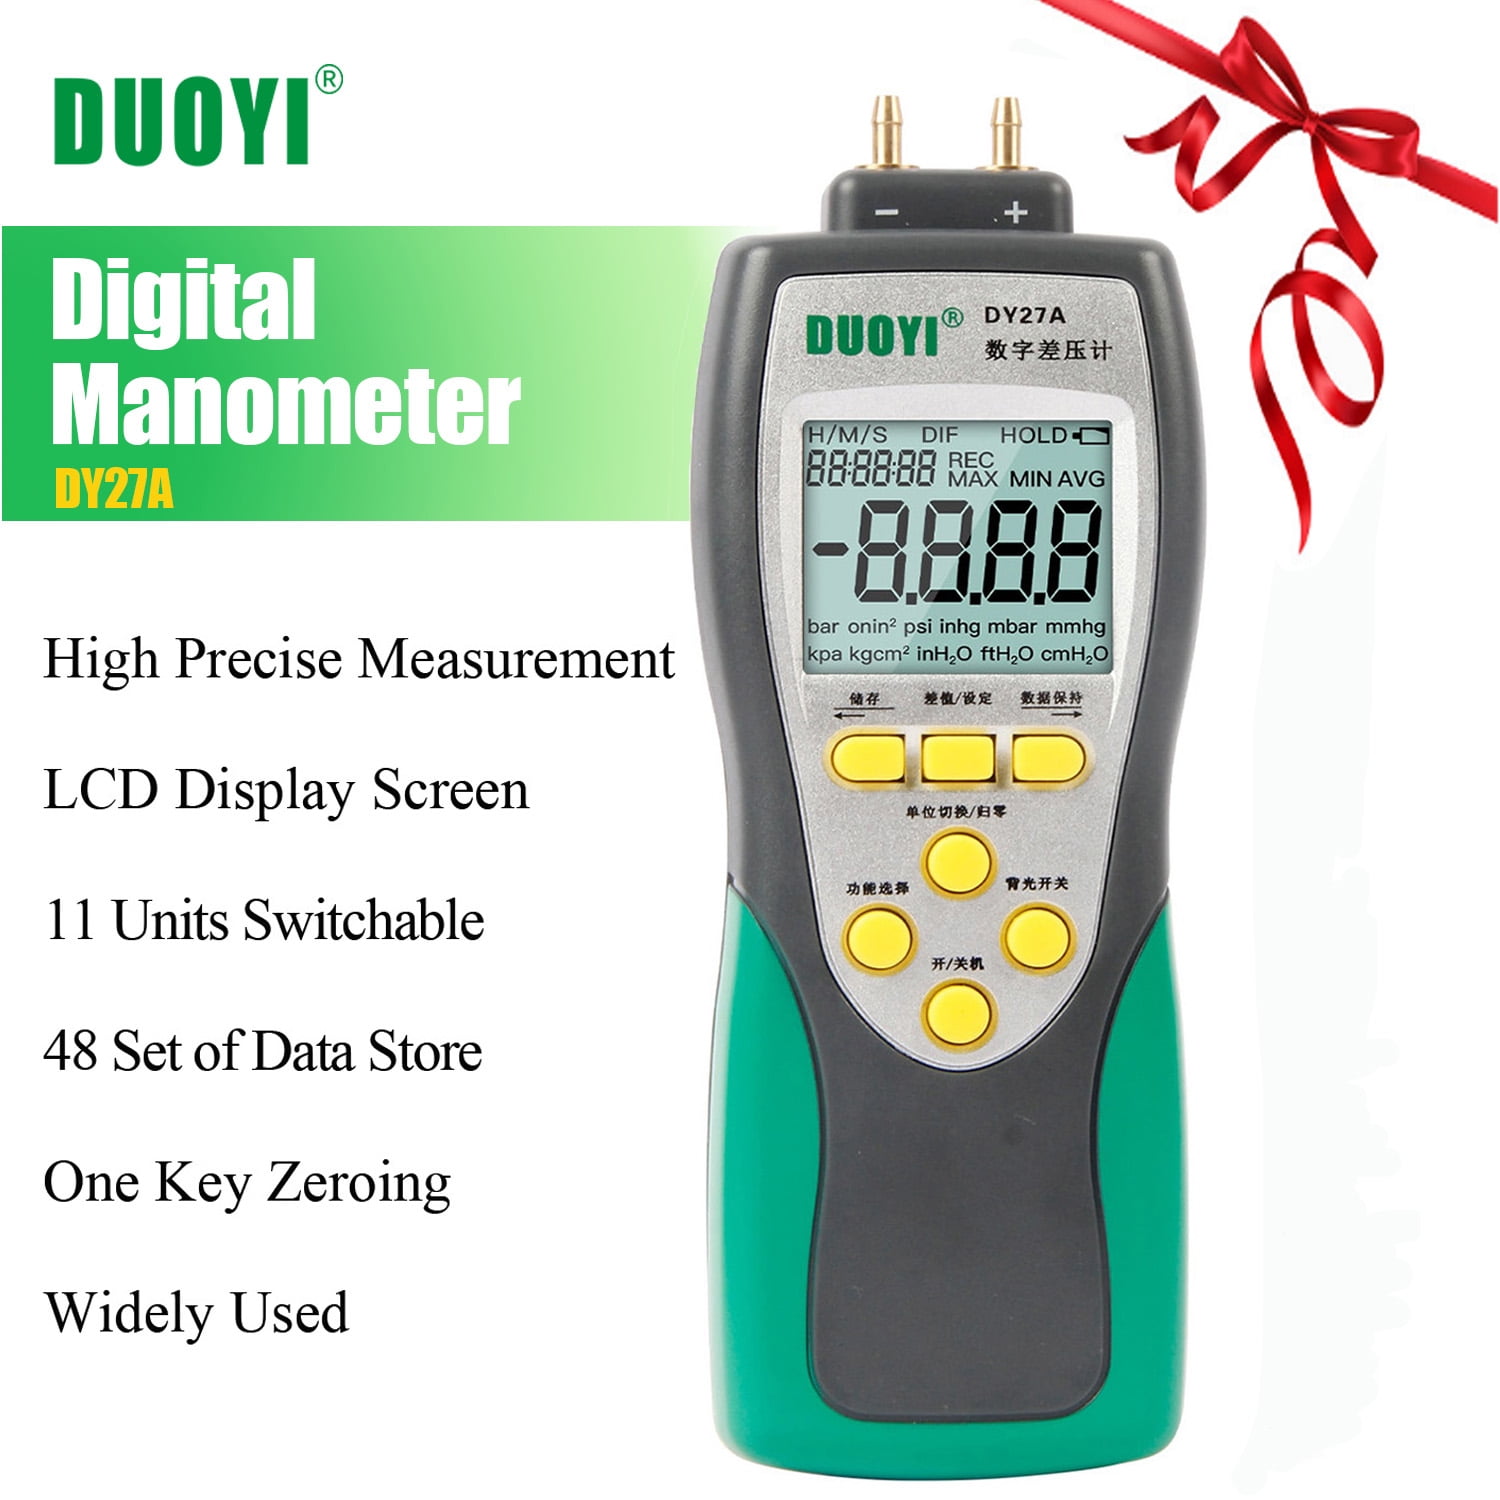 Differential Pressure Meter, LED Backlit Display Handheld Digital